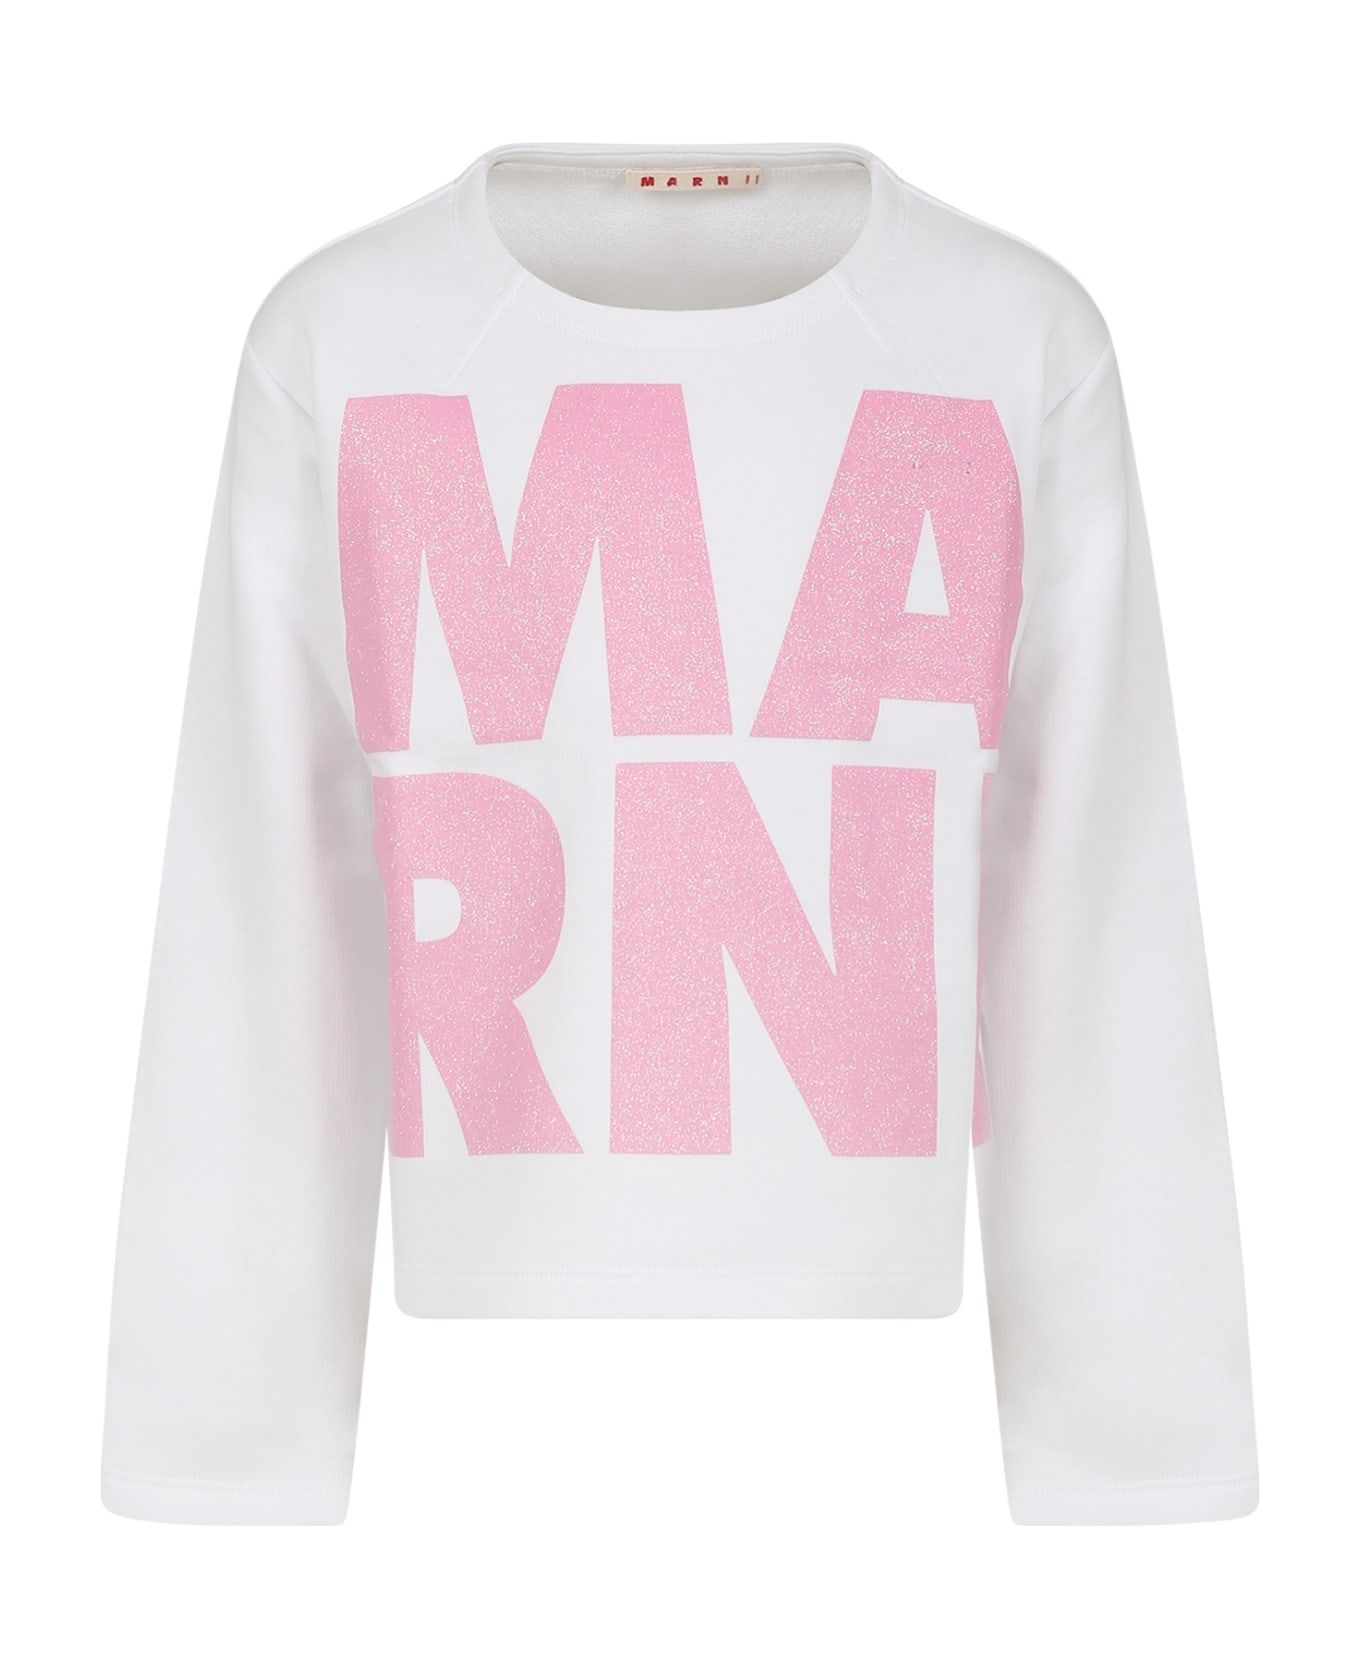 Marni White Sweatshirt For Girl With Logo - White